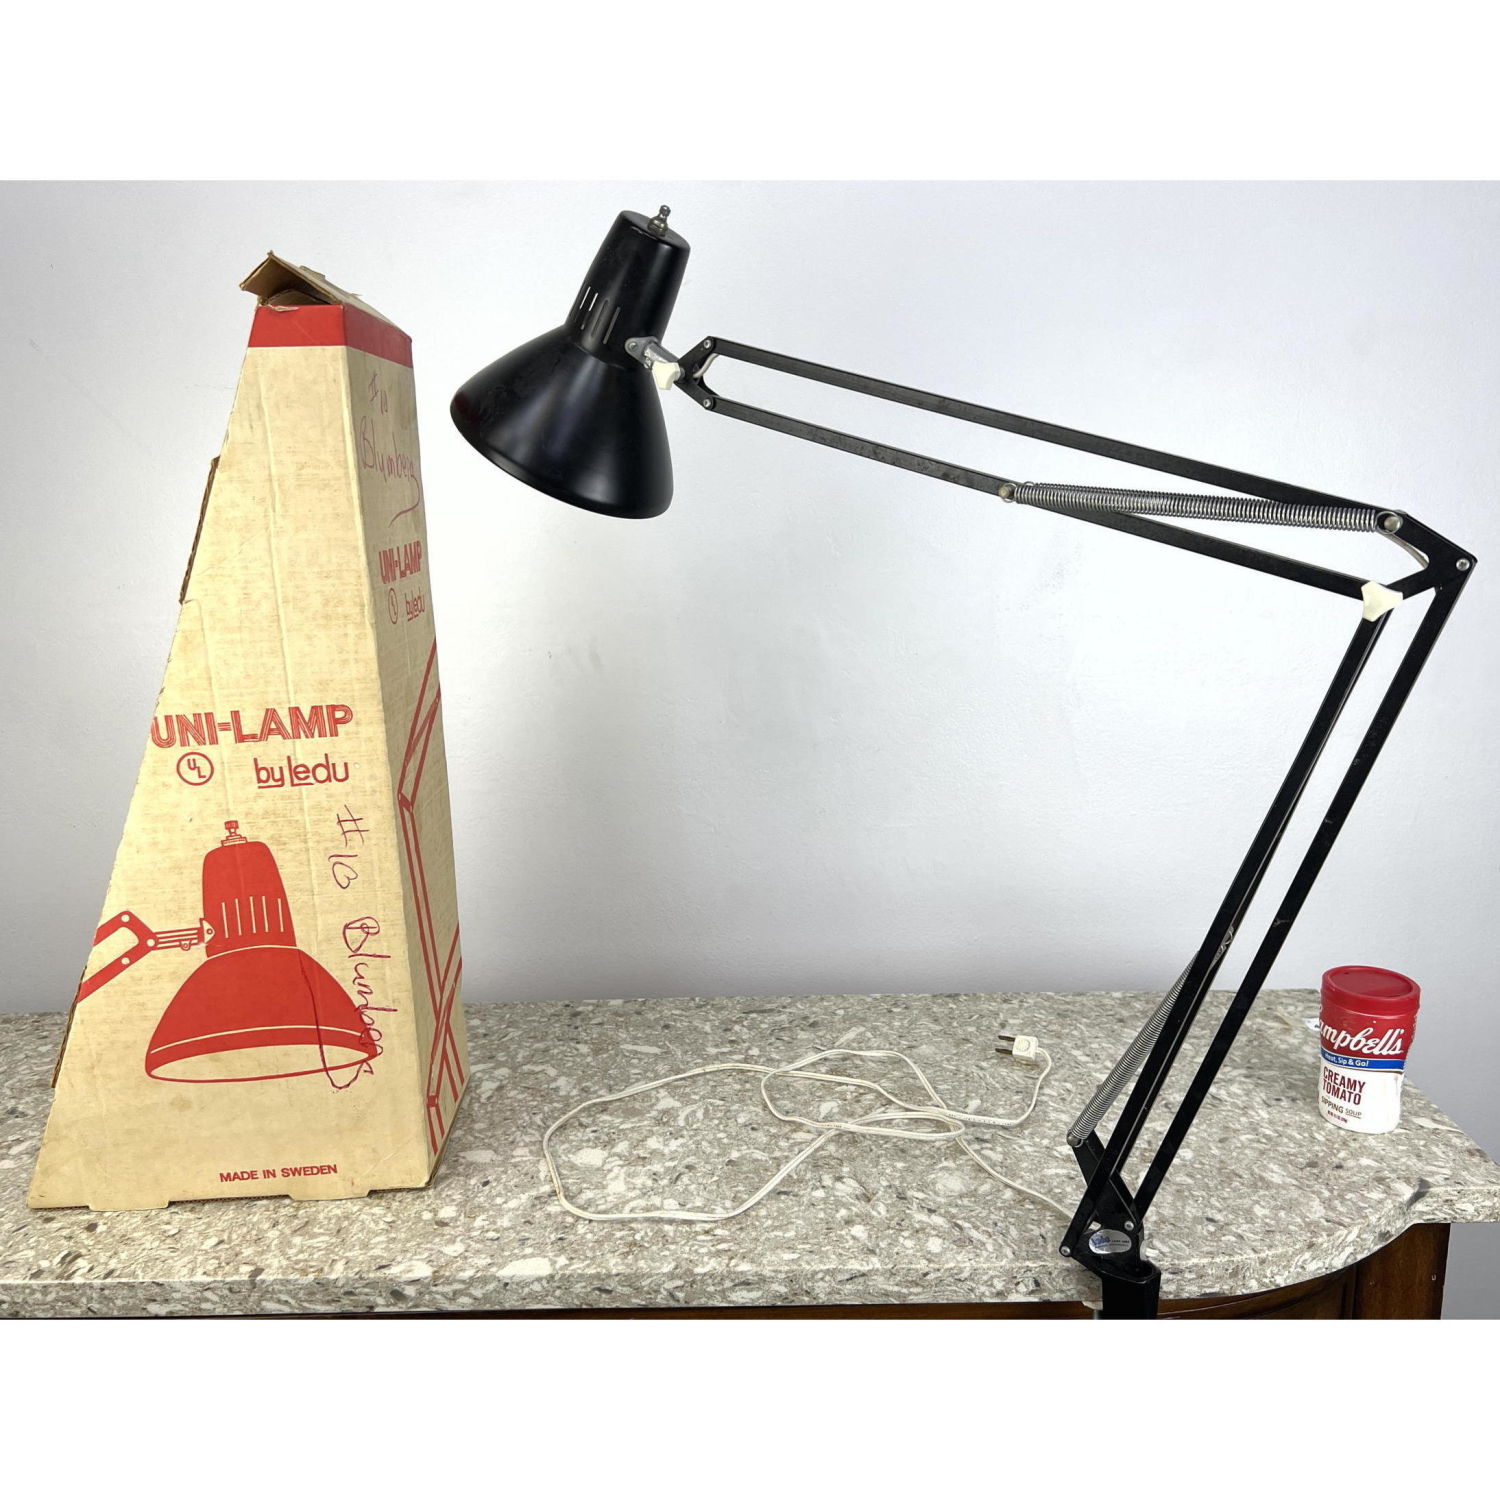 UNI LAMP by LEDU Adjustable Clamp 2fe5a9